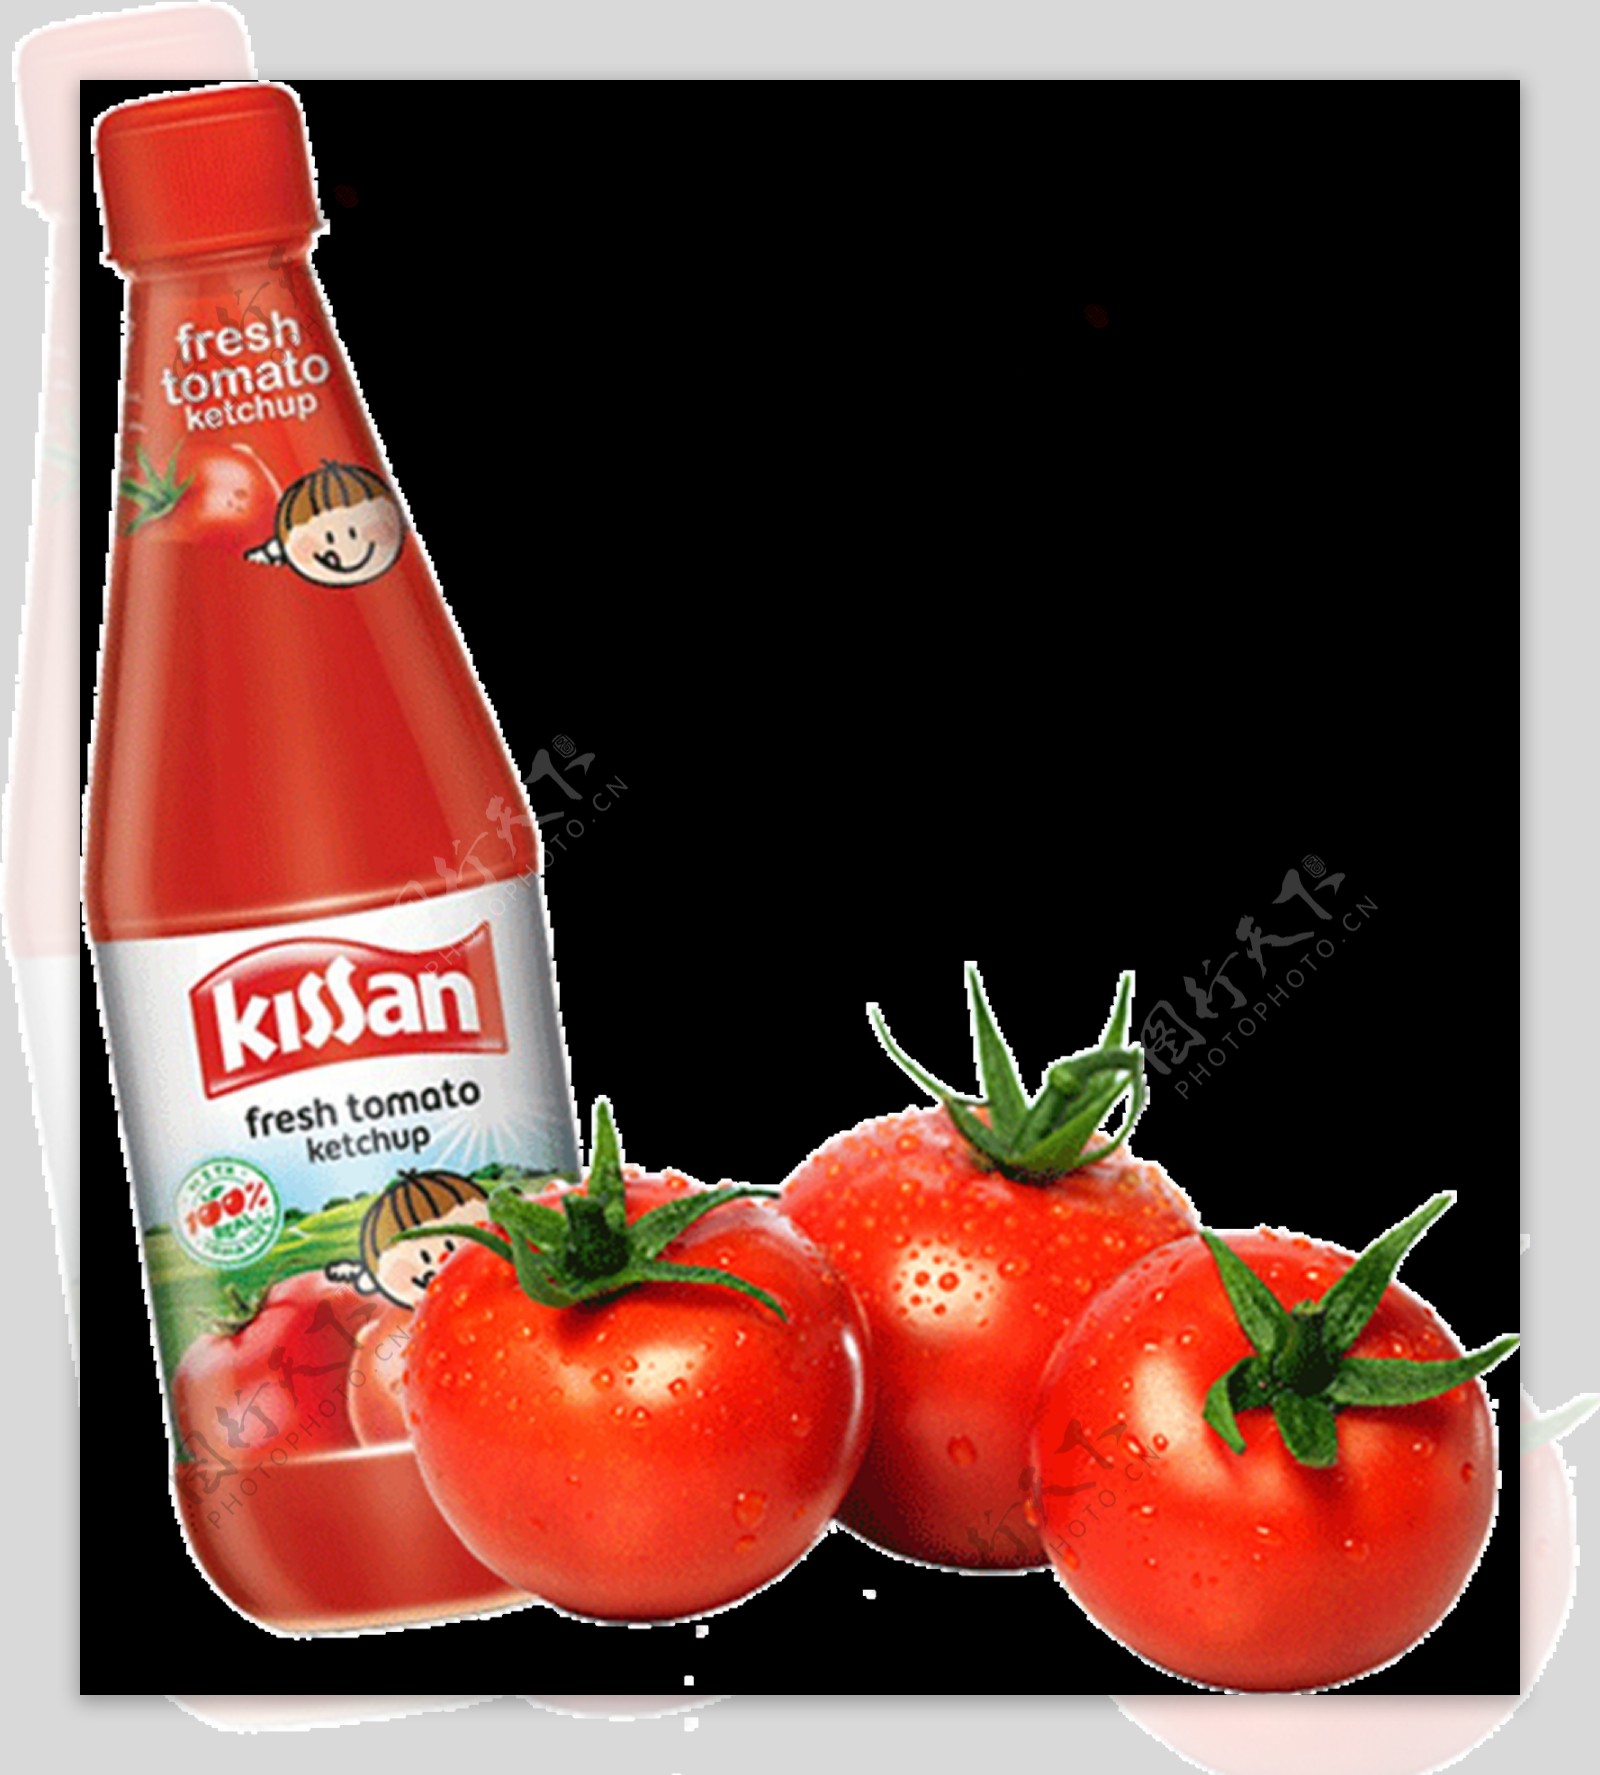 番茄酱怎么做_番茄酱的做法_Isabella2015_豆果美食